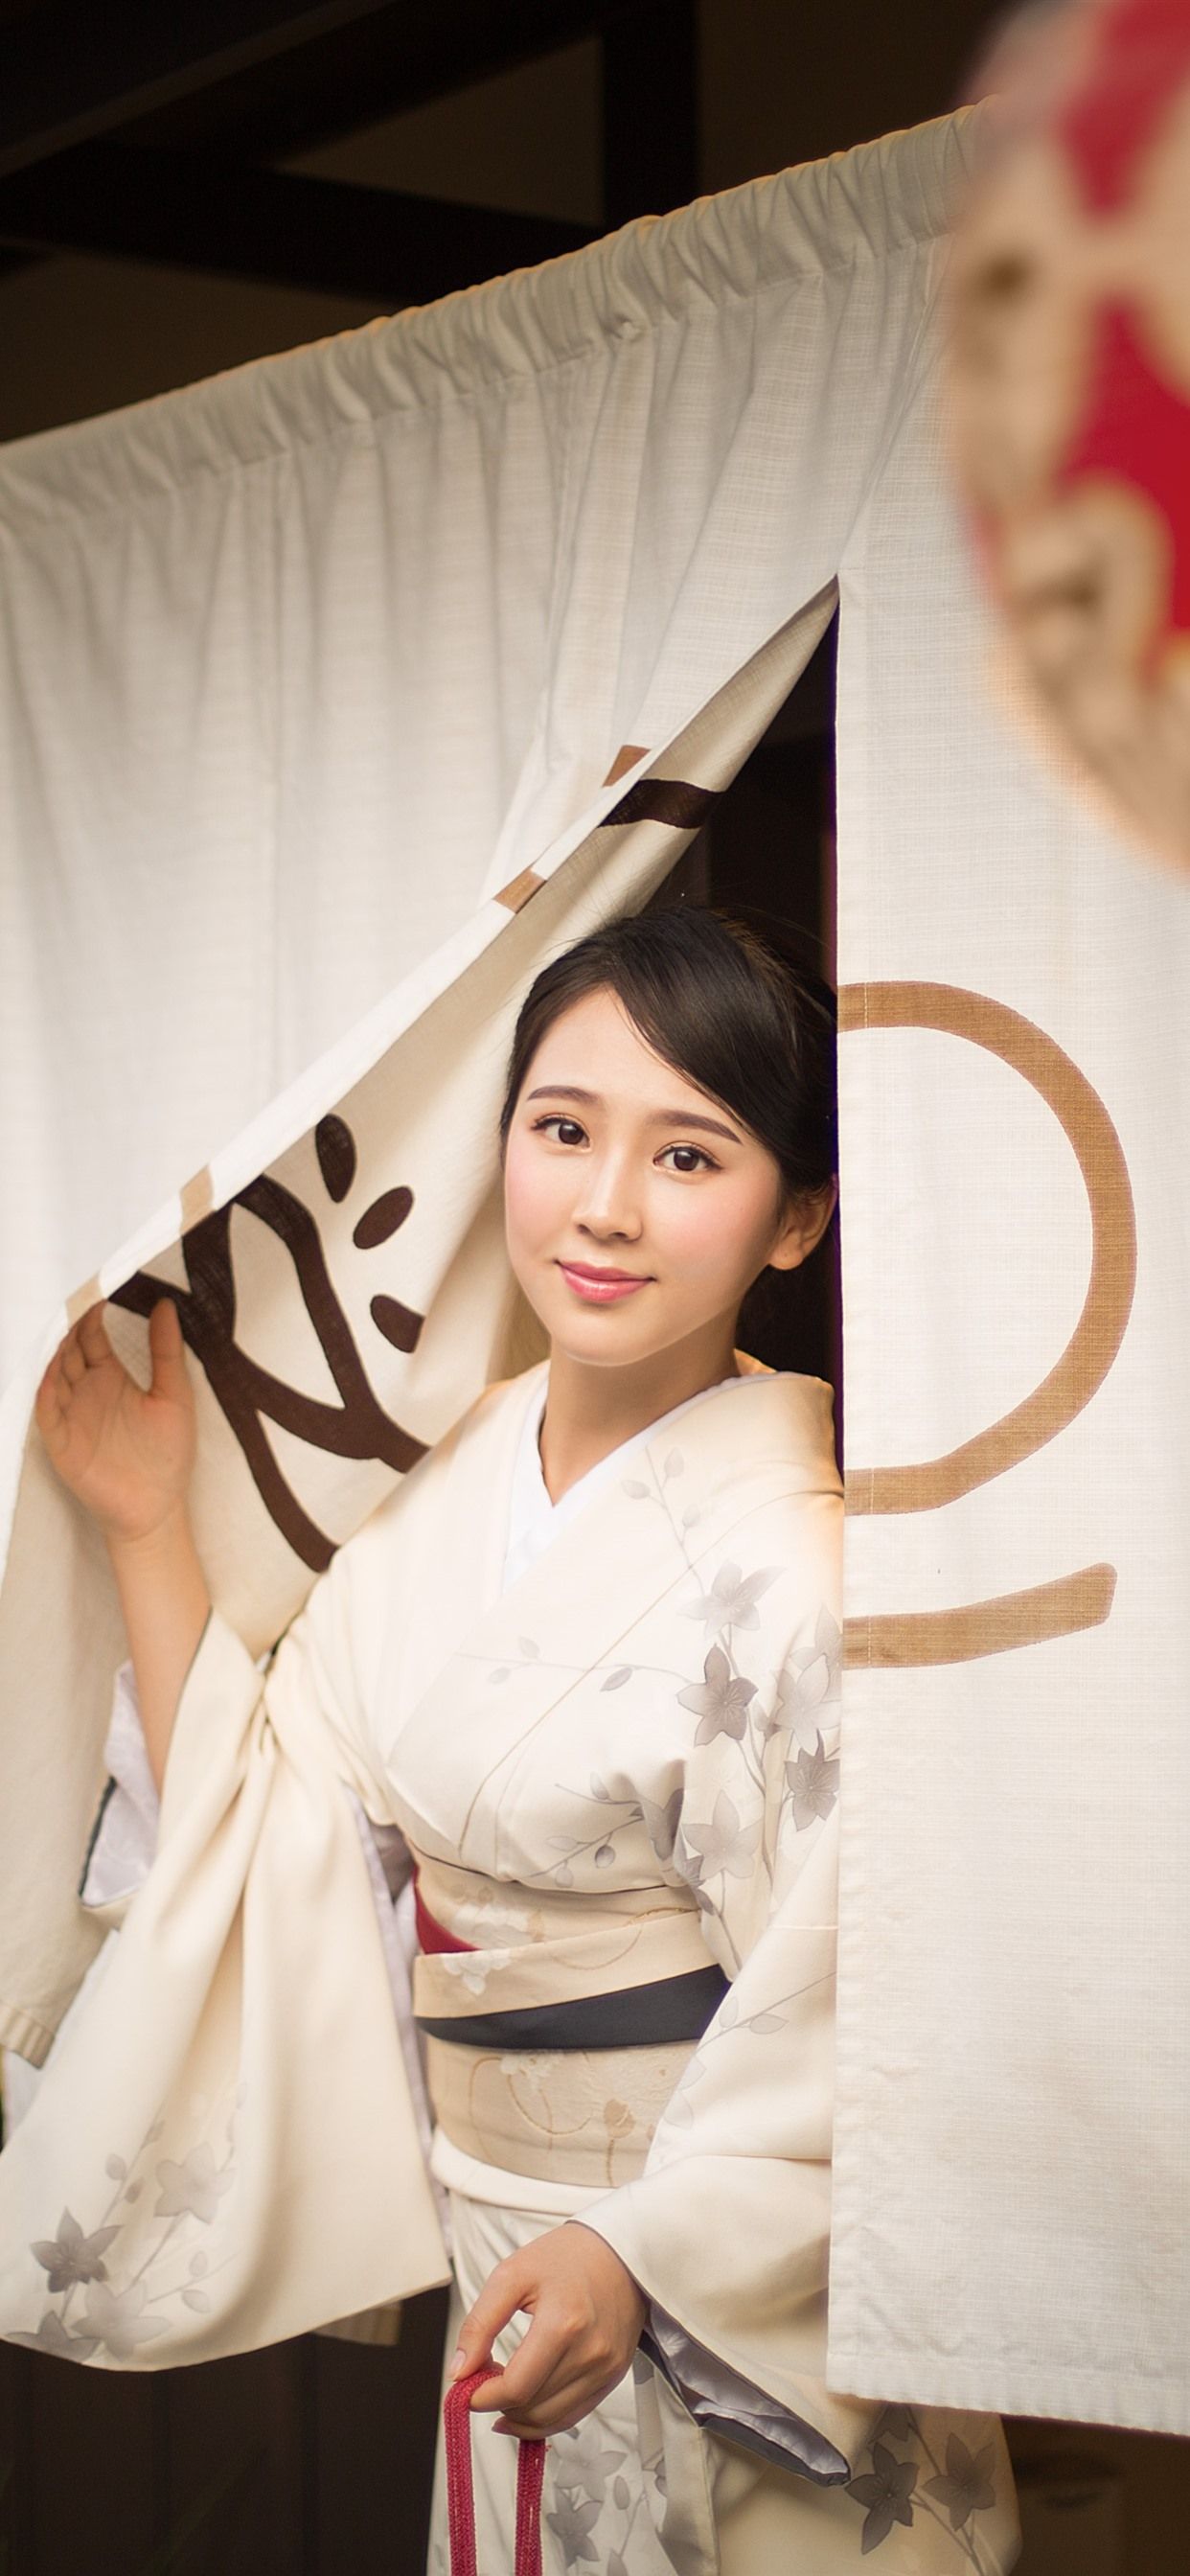 Beautiful Japanese girl, kimono, smile, lantern 1242x2688 iPhone